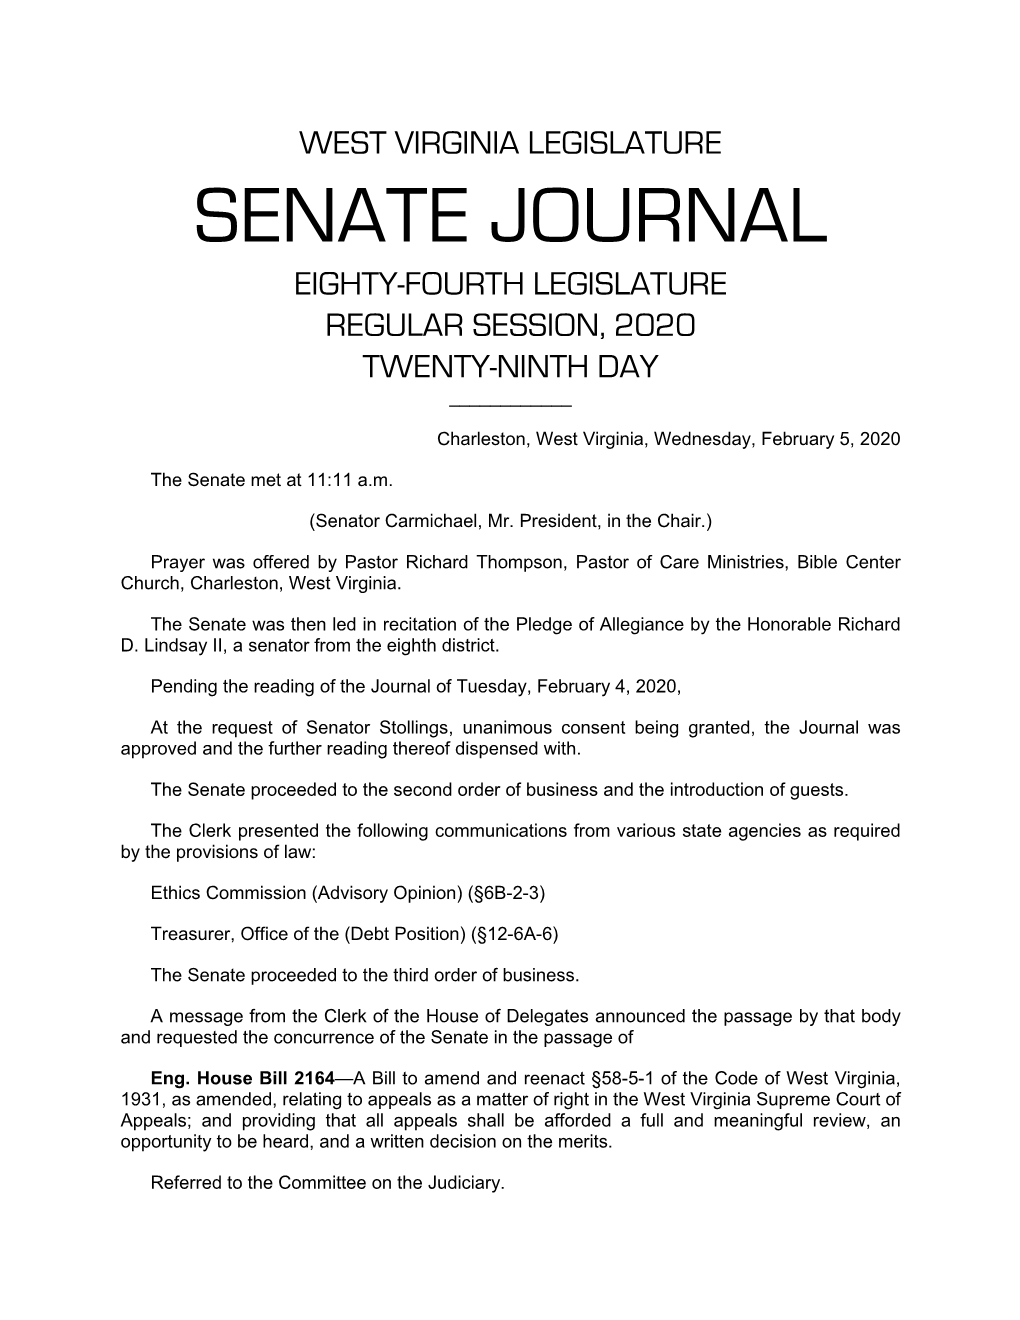 Senate Journal Eighty-Fourth Legislature Regular Session, 2020